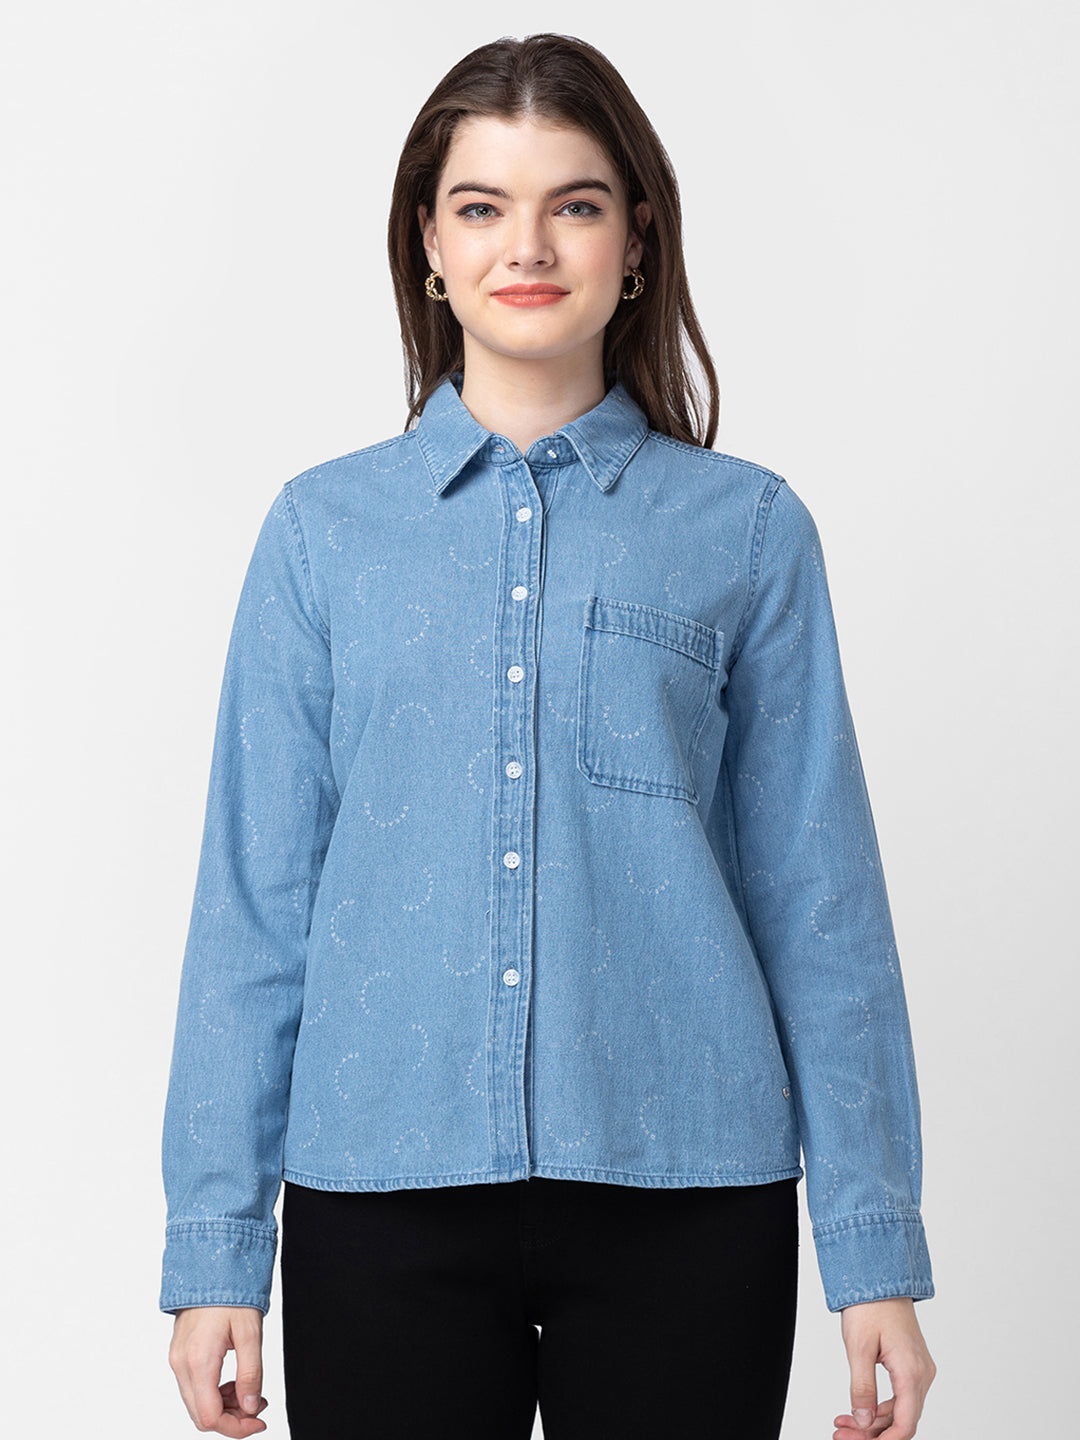 KAN CAN Boyfriend Denim Shirt (Light Wash) – 9th Street Clothing Co